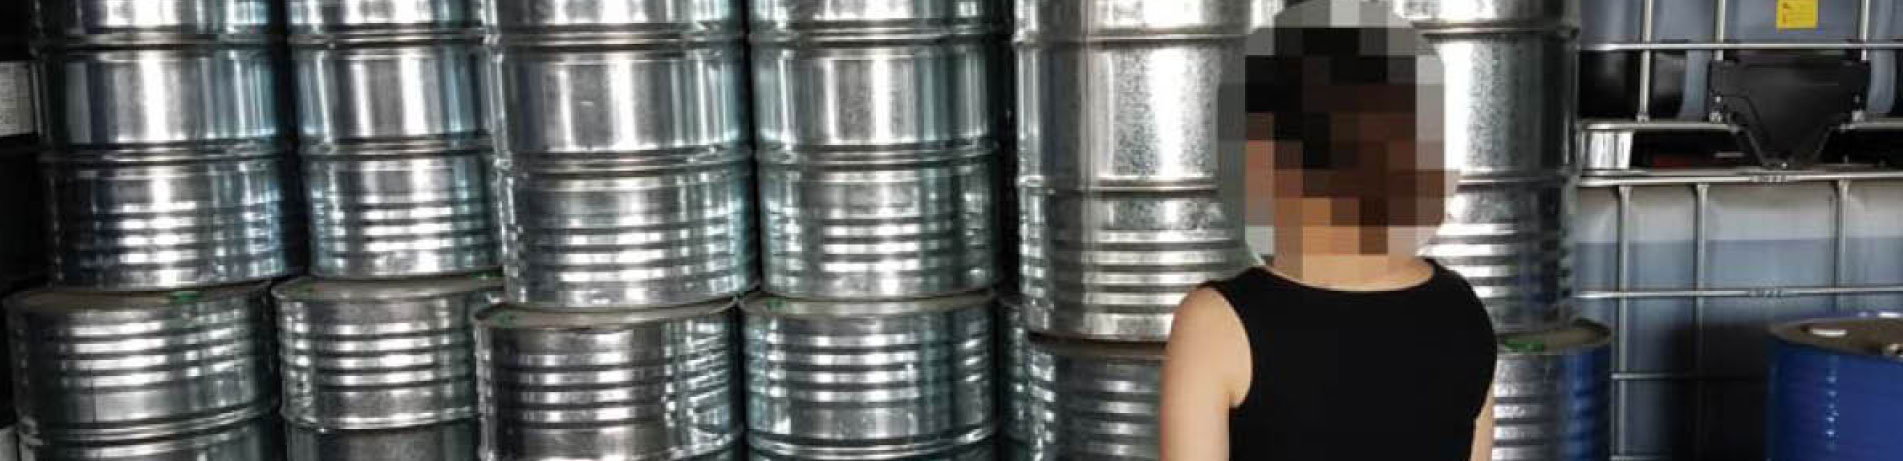 Barrels containing CFCs, China